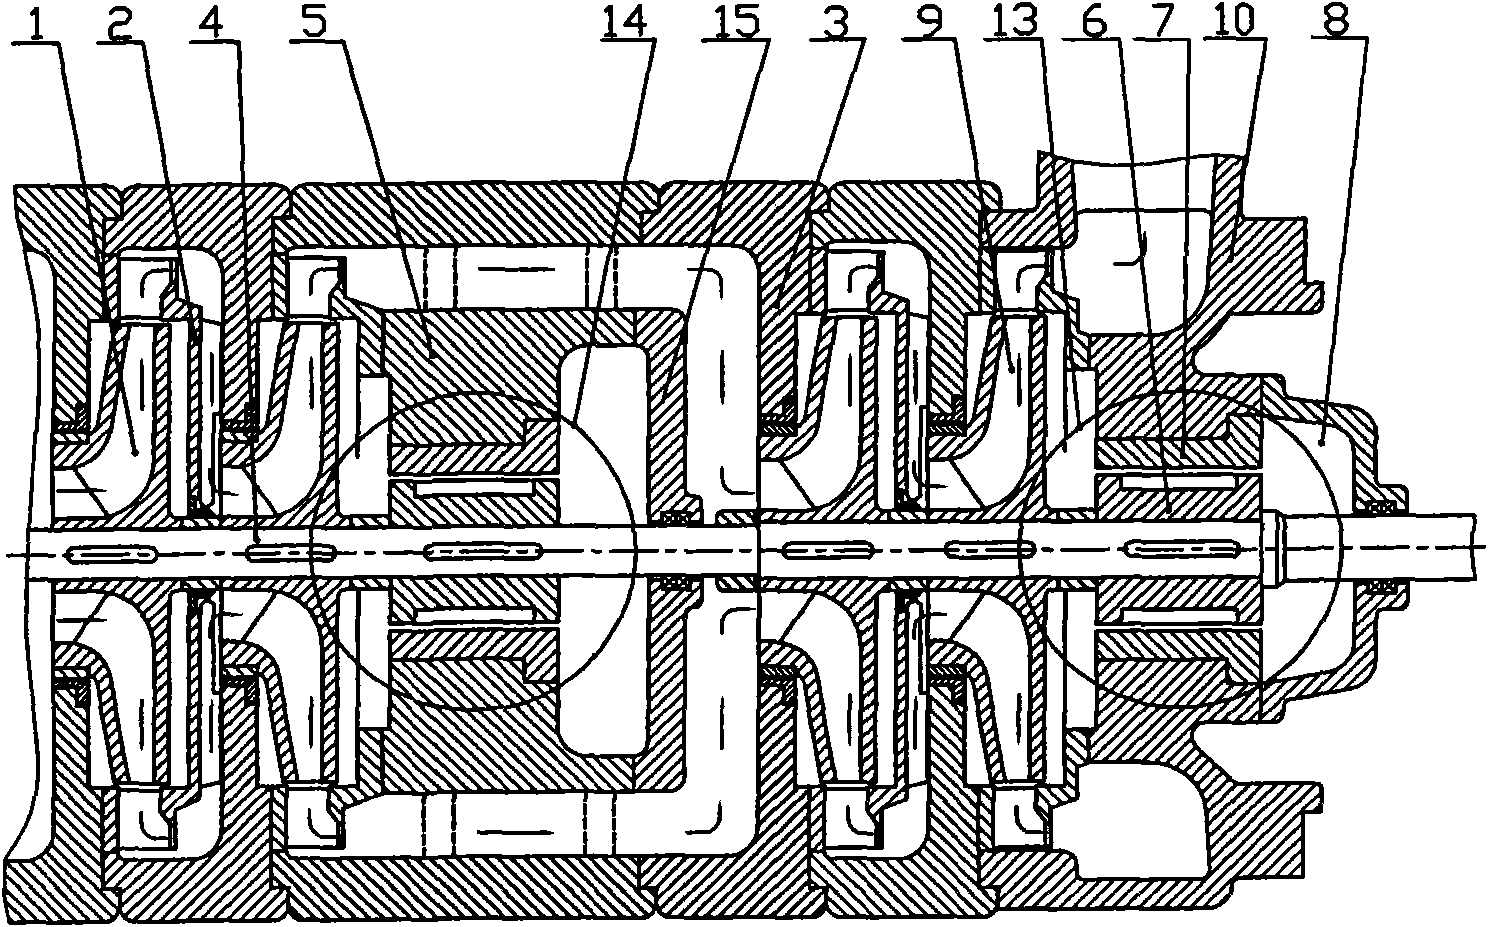 Novel multistage centrifugal pump